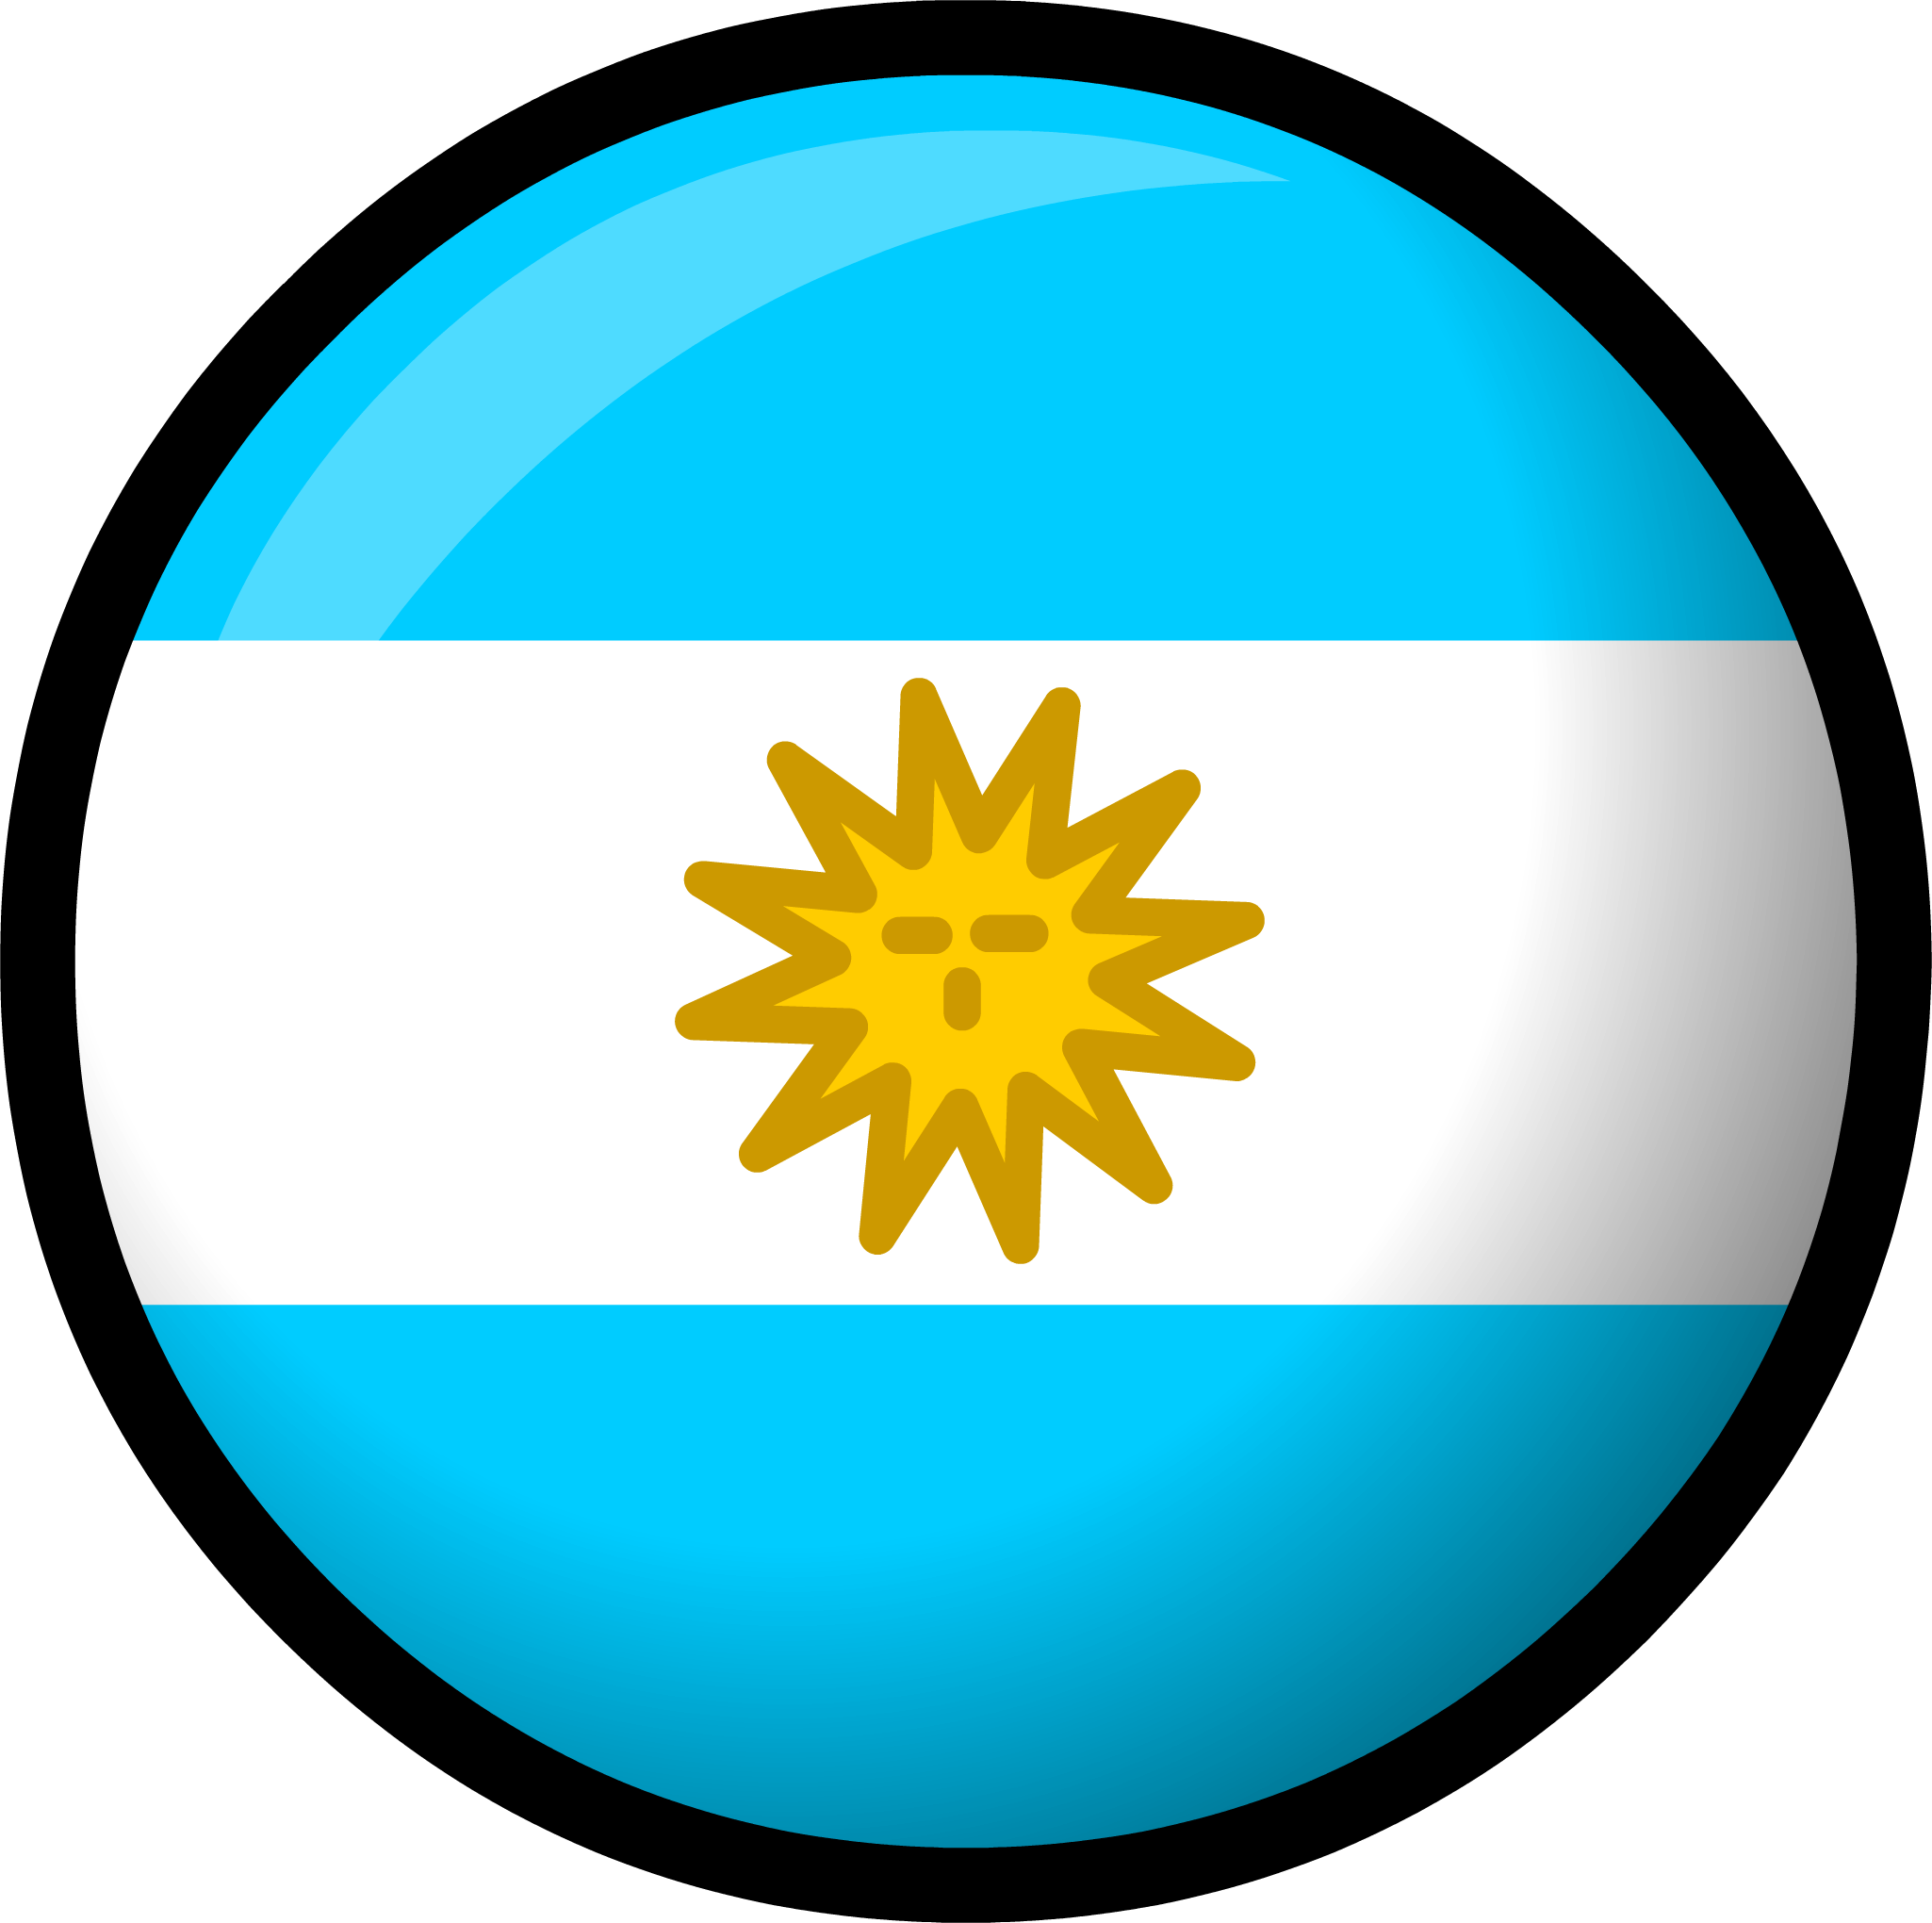 Argentina flag | Club Penguin Wiki | Fandom powered by Wikia